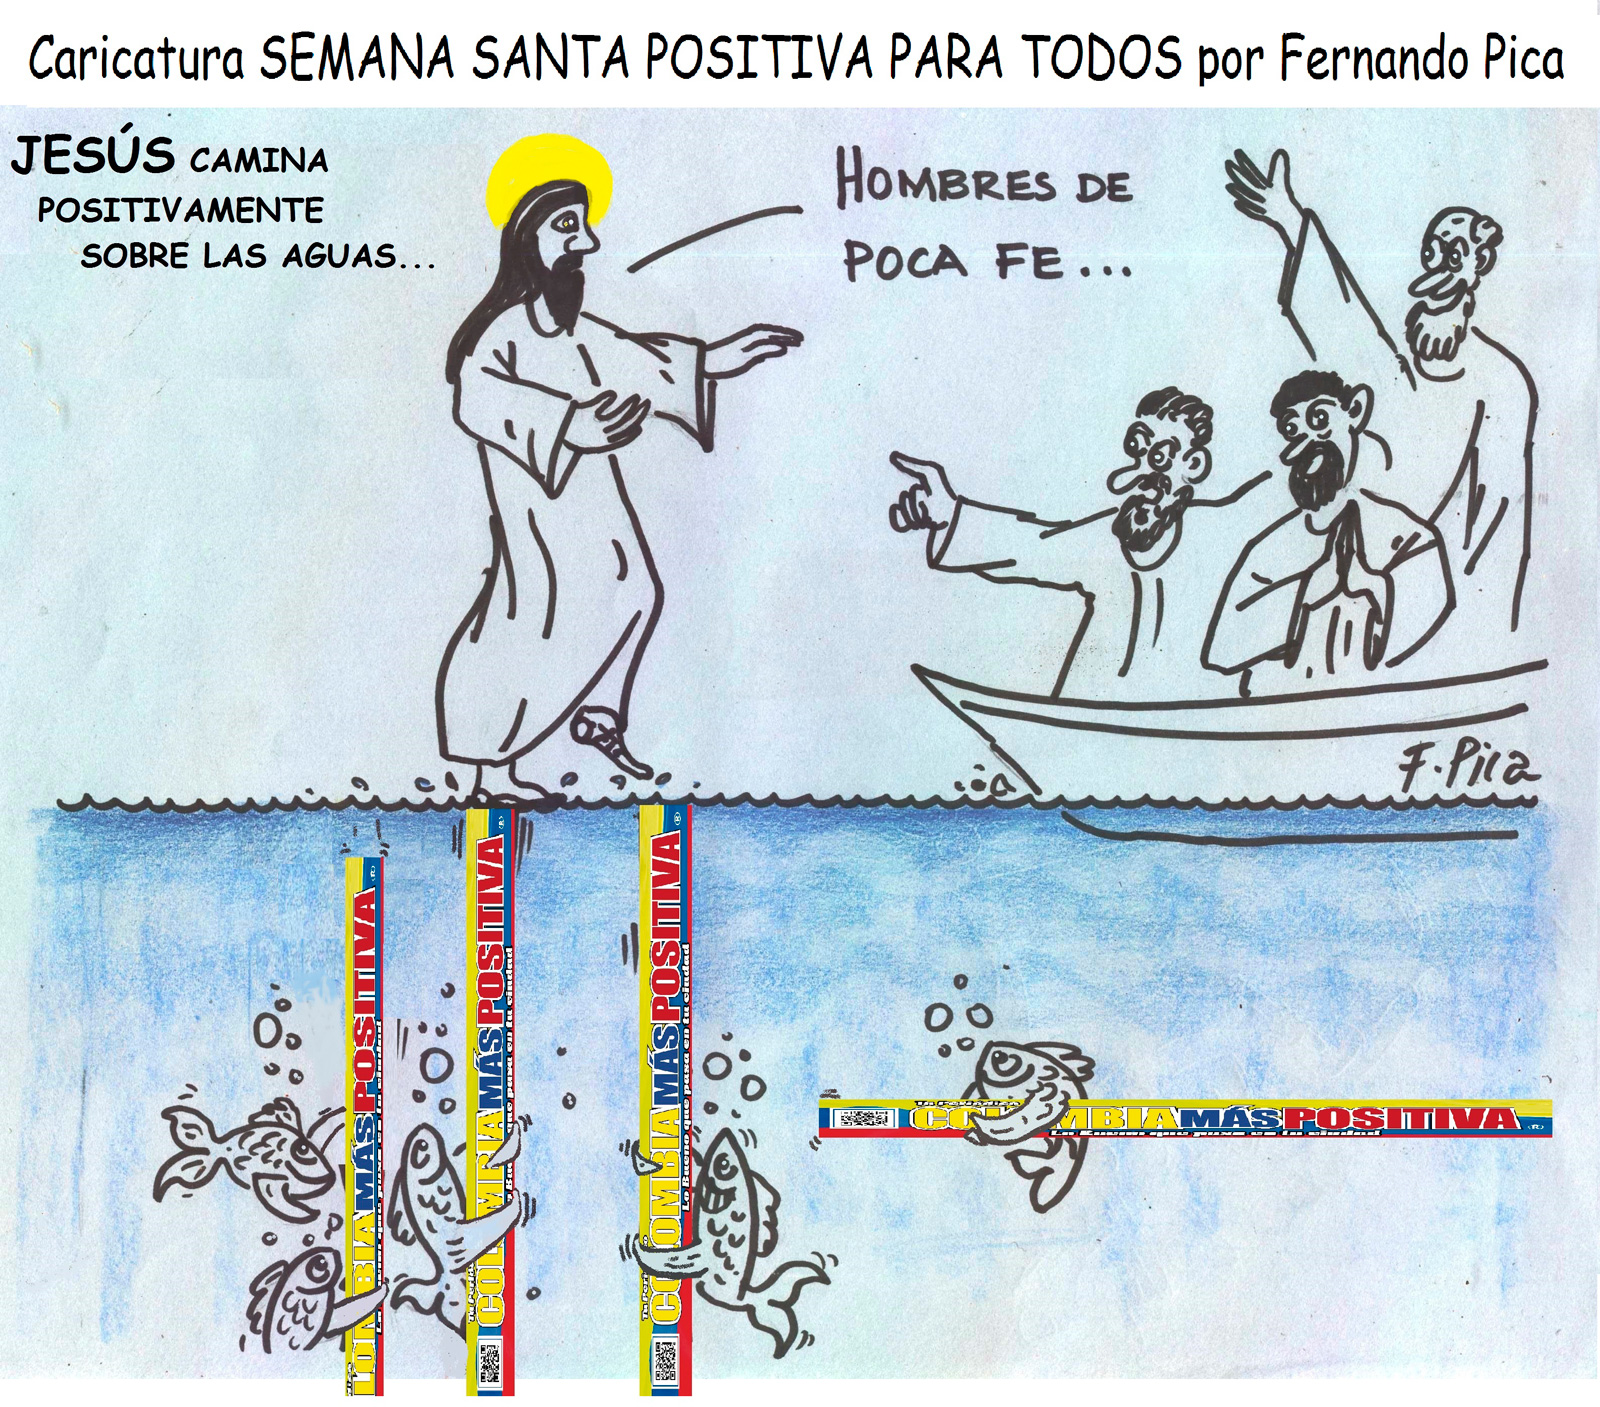 Caricatura-SEMANA-SANTA-POSITIVA-por-Fernando-Pica